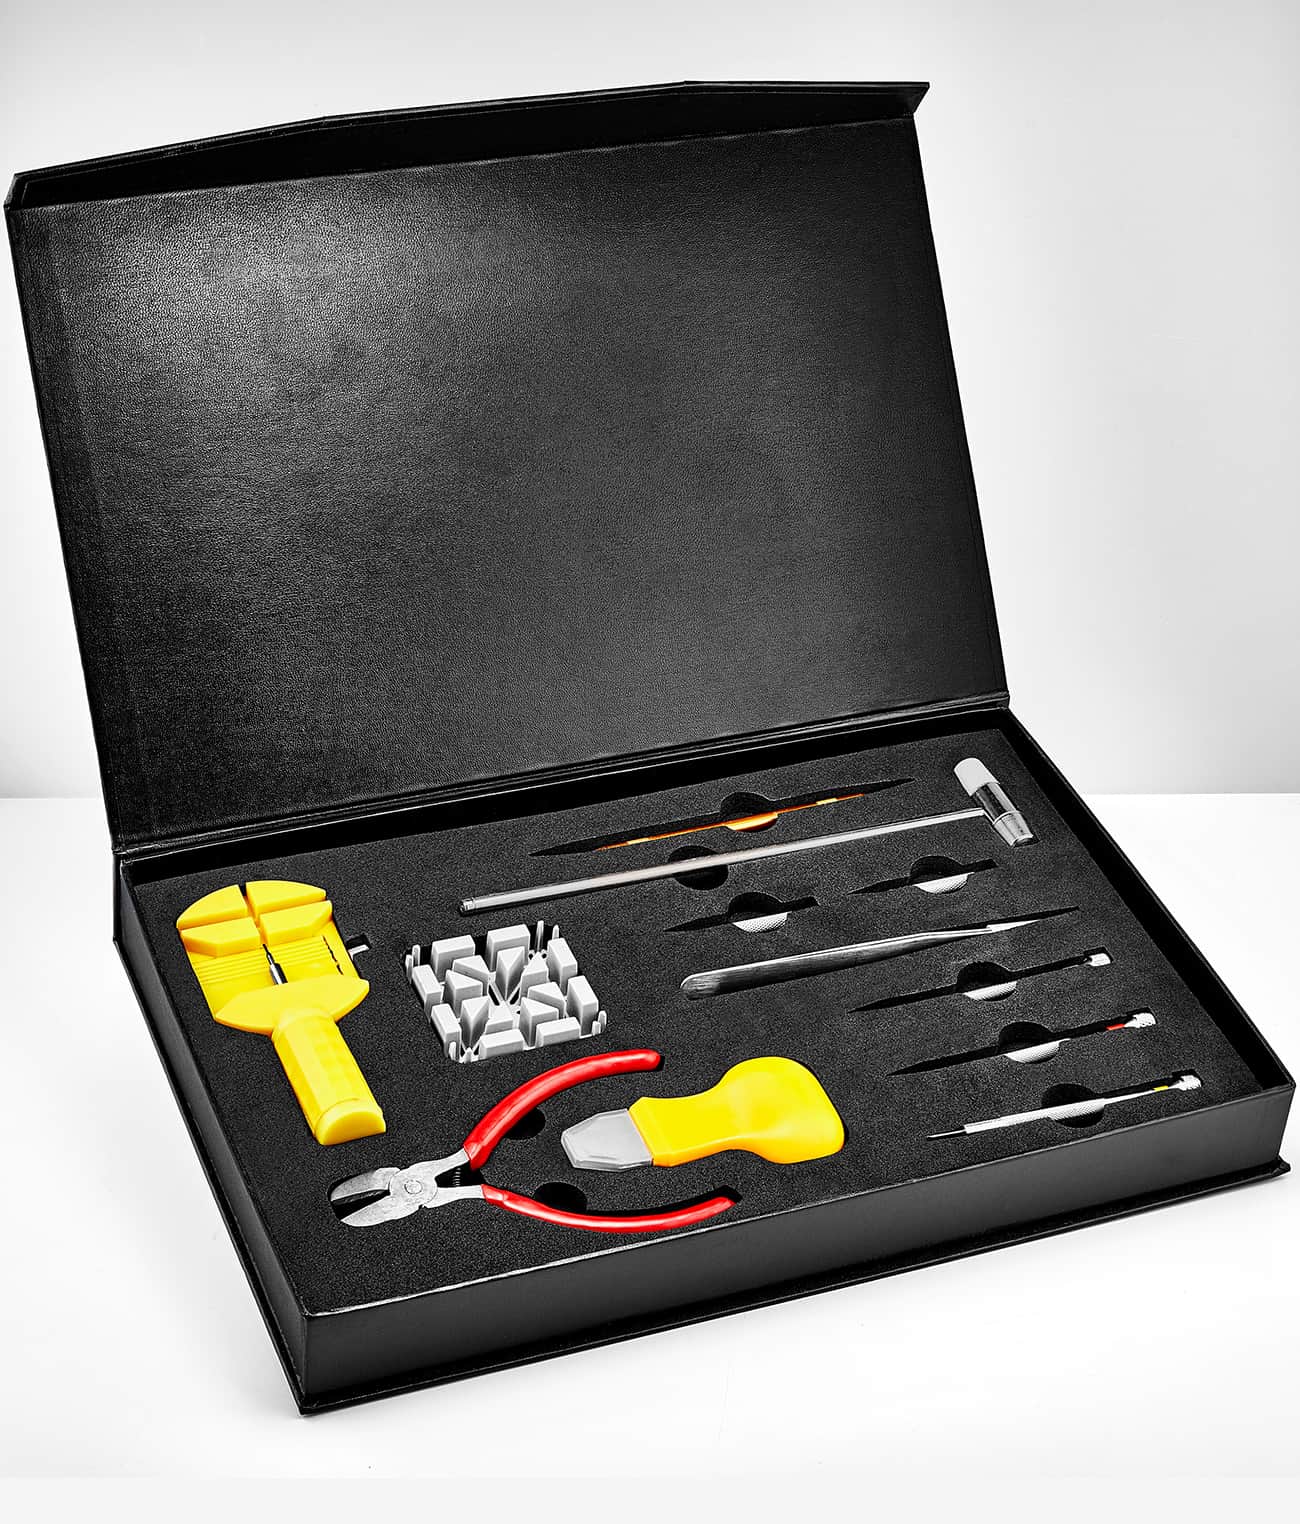 Anatol 371.01, Depthmaster 3940.1, Signature Pen, and Watch Tool Kit